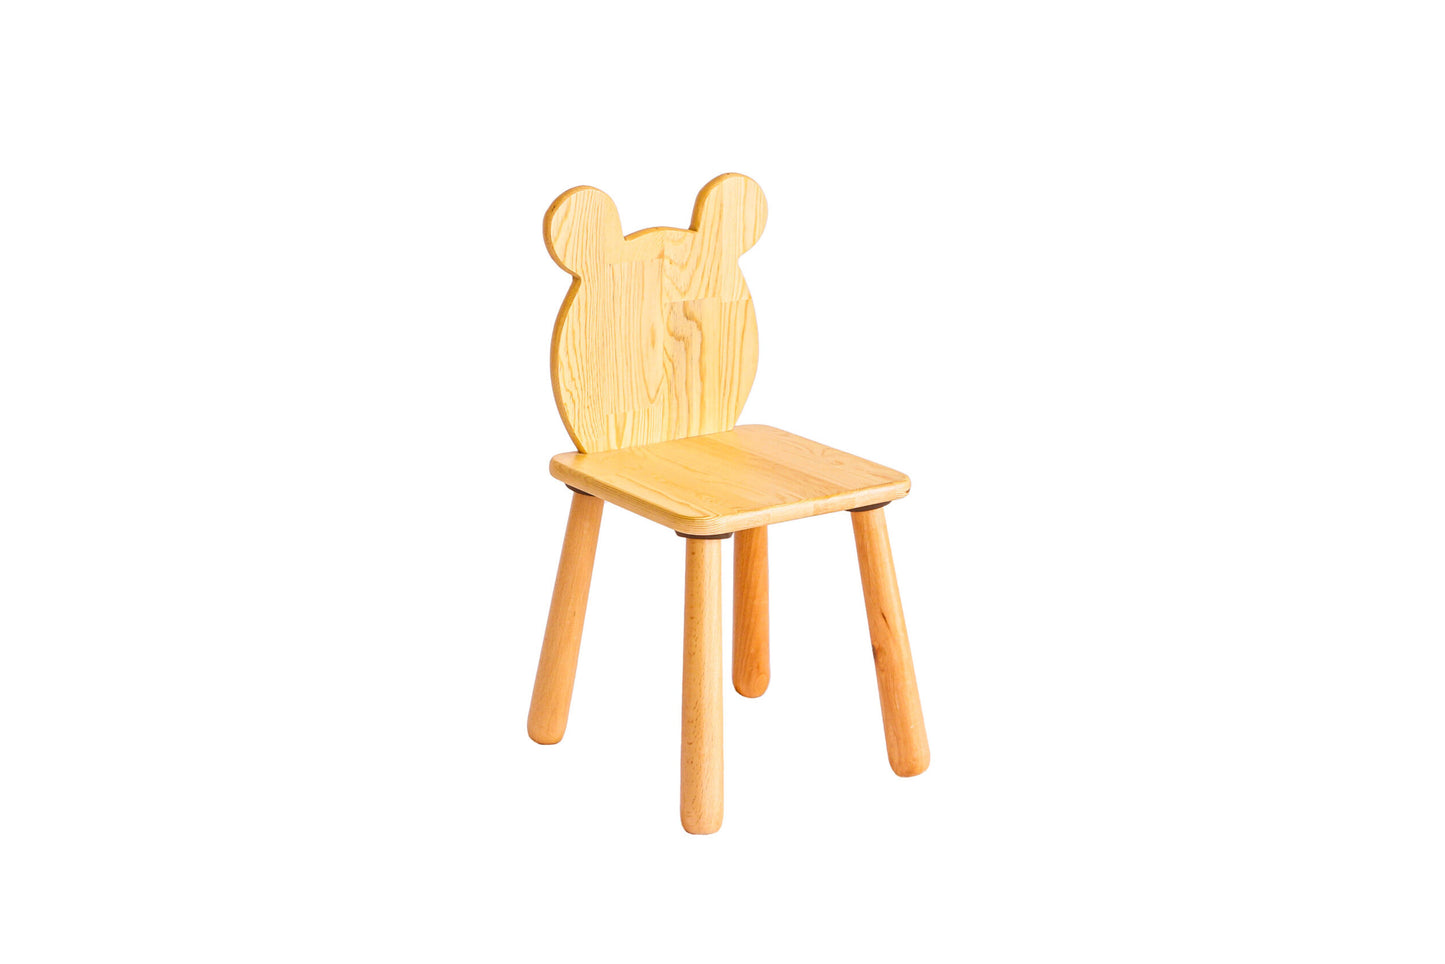 Wood&Joy Animal Ear Chair